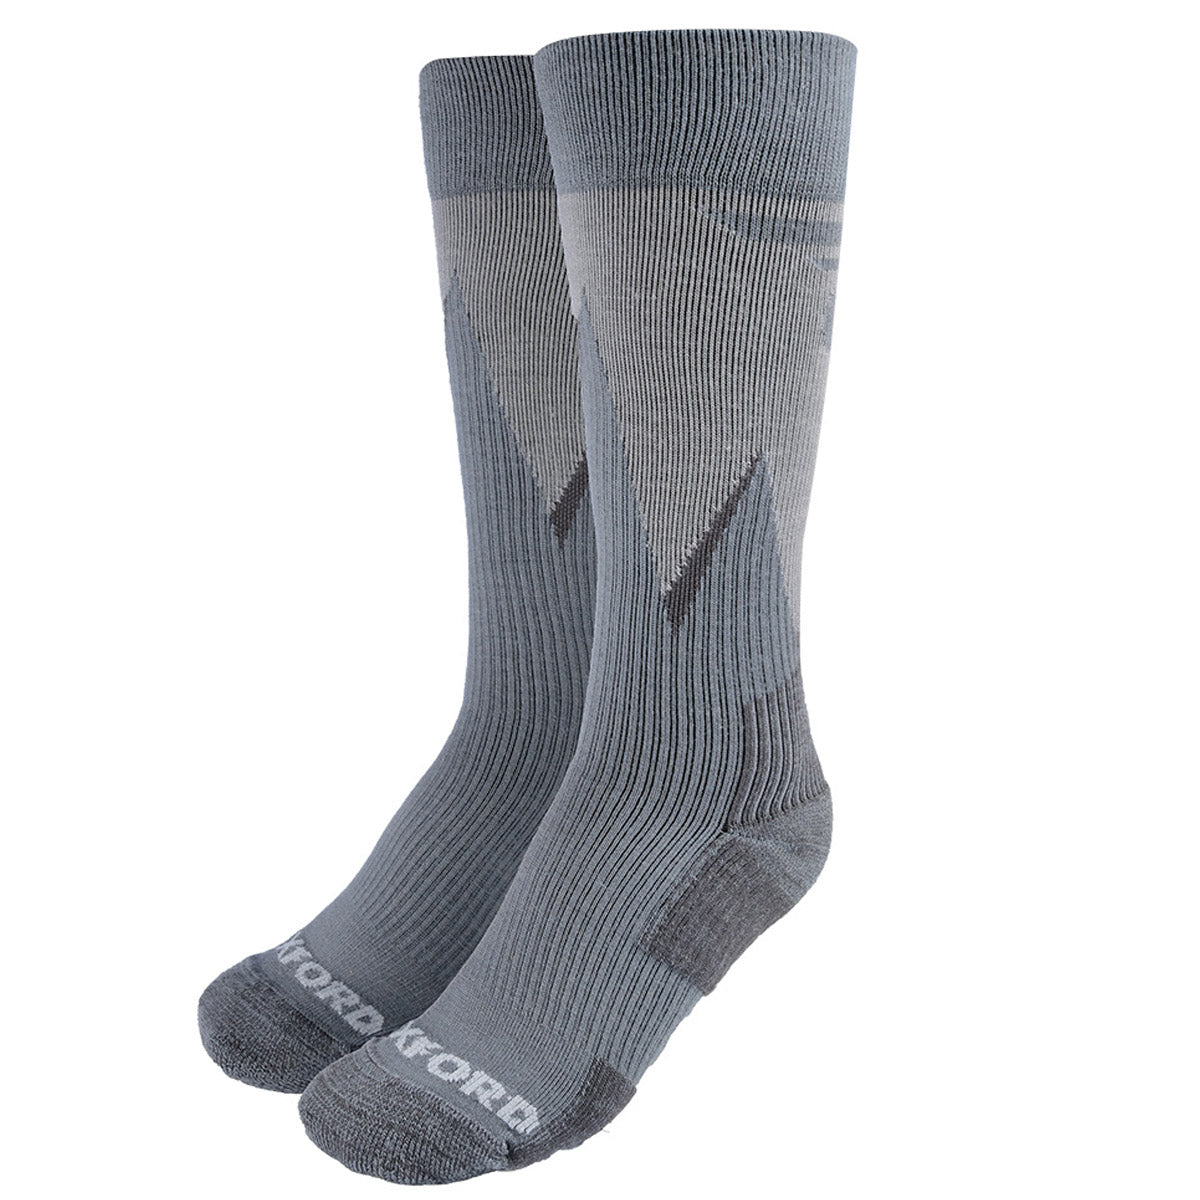 Oxford Merino Oxsocks: Technical thermal socks to keep your feet warm